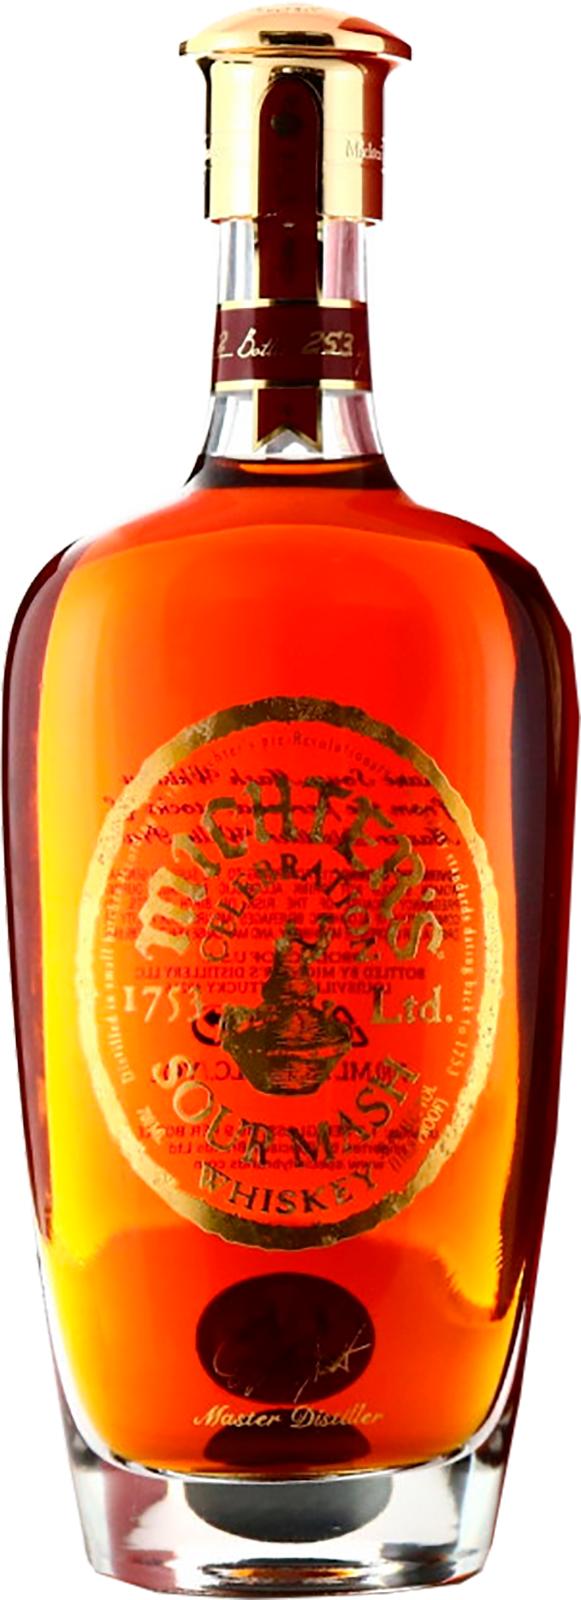 Michter's Celebration Sour Mash Whisky Charred White Oak Barrel 58.4% 700ml